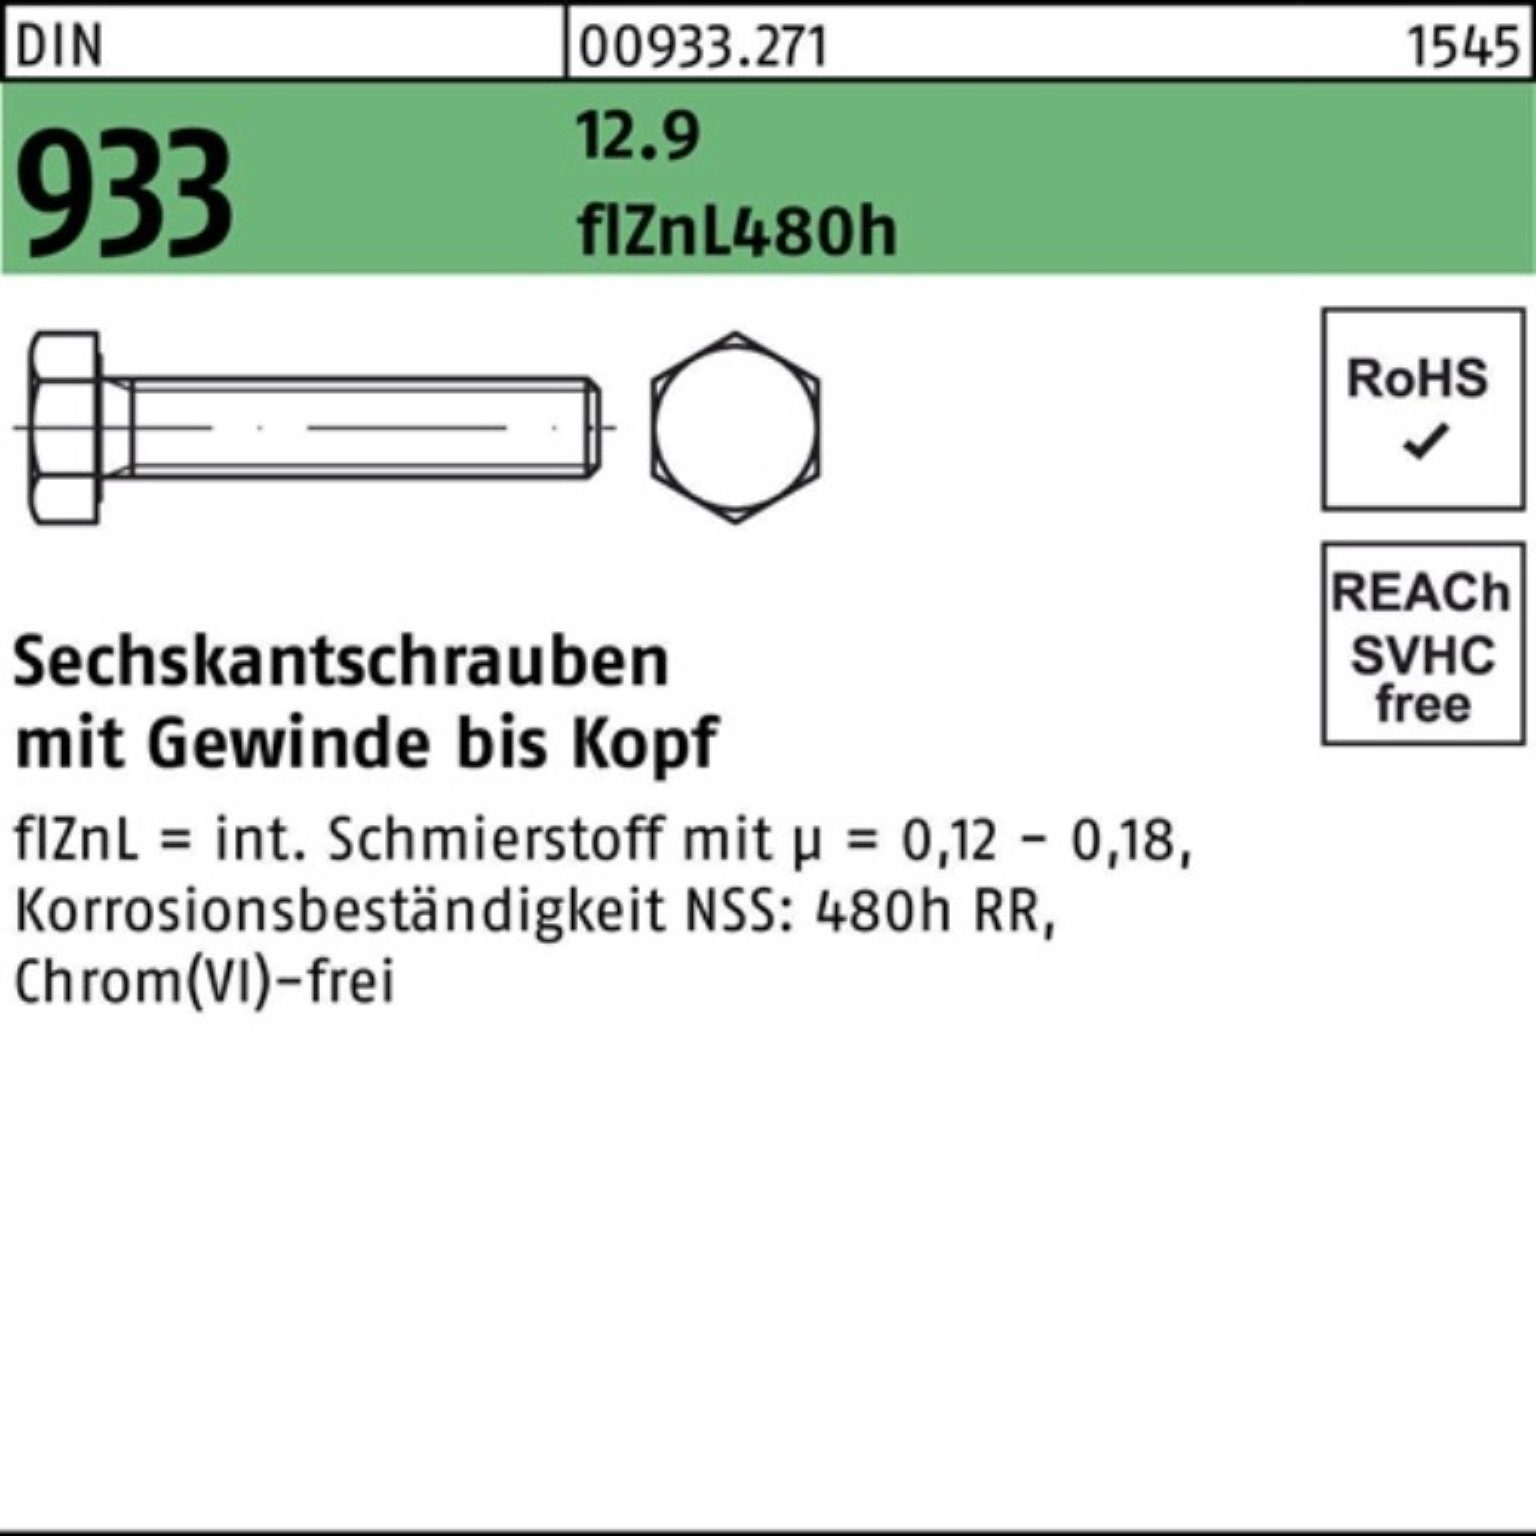 Reyher Sechskantschraube 100er DIN 933 12.9 480h Sechskantschraube zinkla 30 VG M16x flZnL Pack